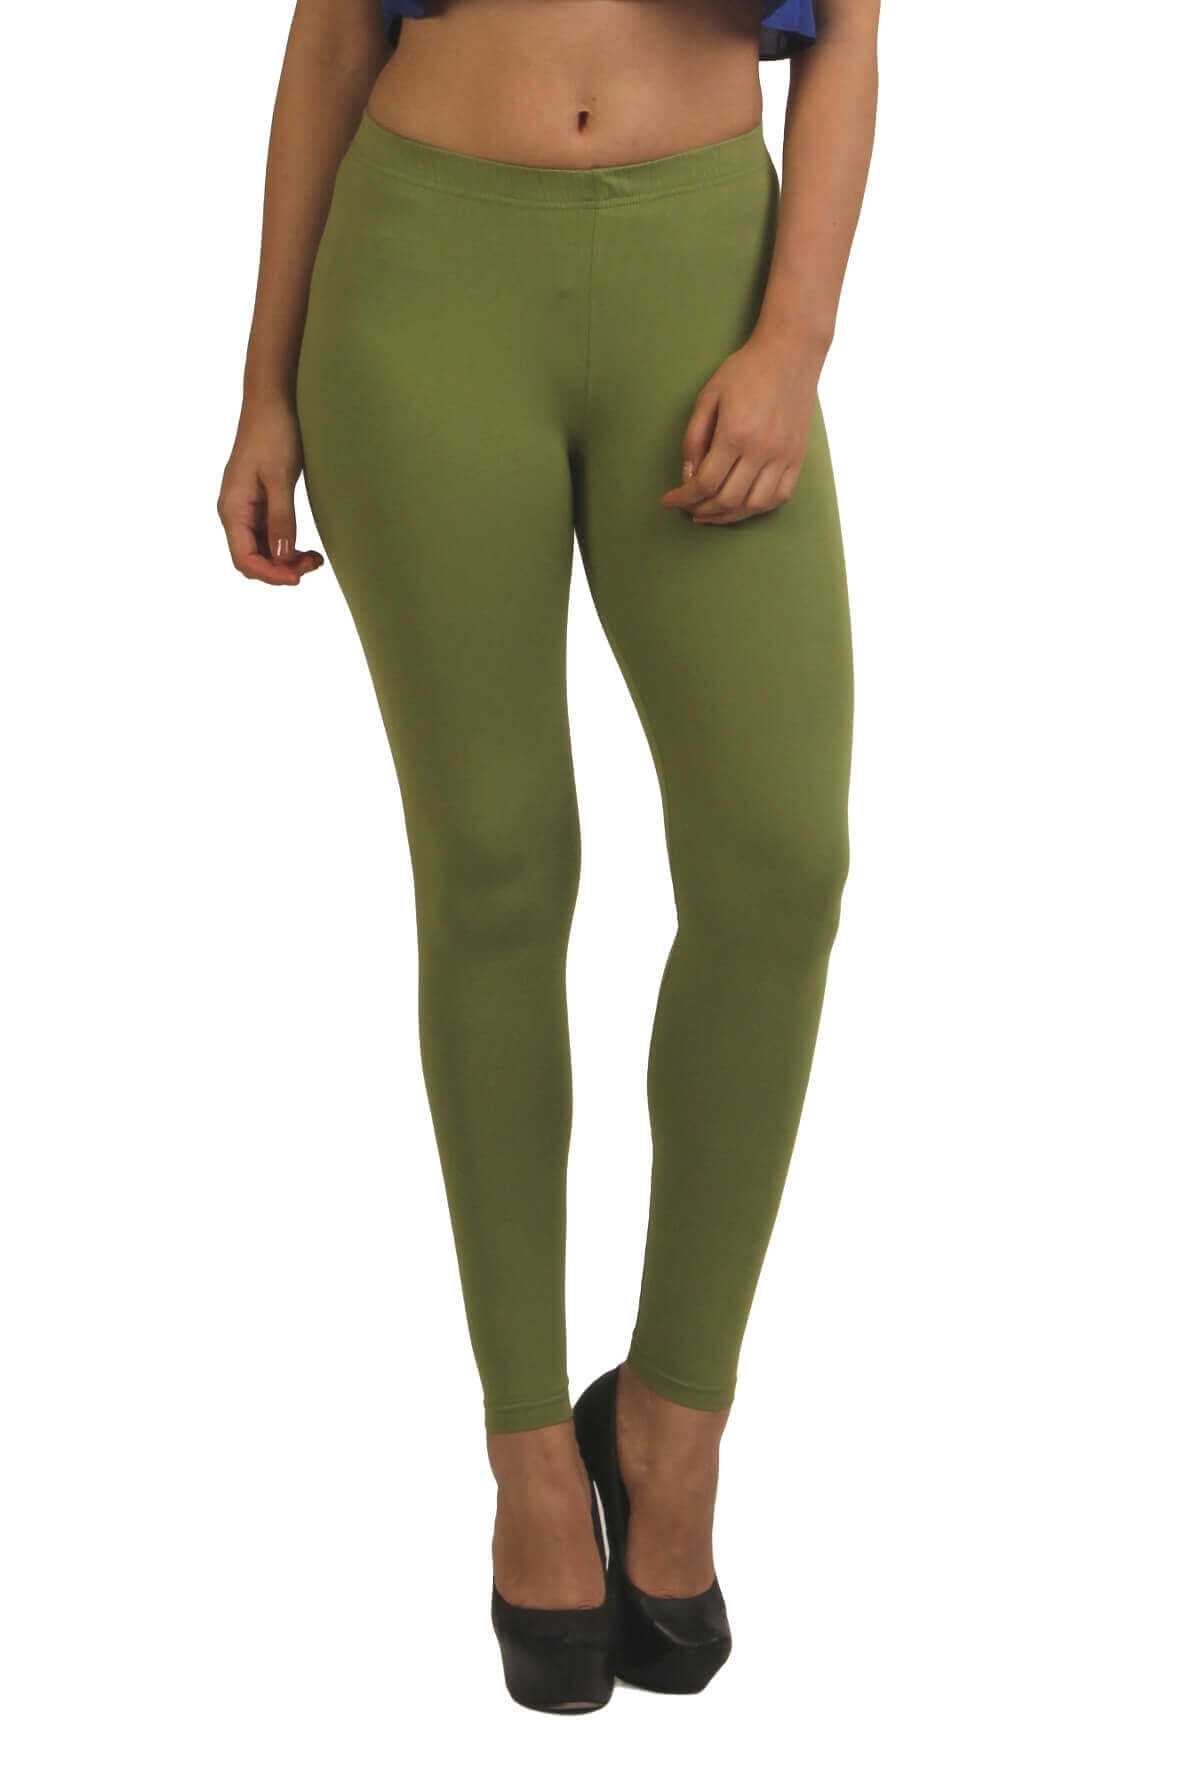 Vami Women's Cotton Stretchable Churidar Legging - FourLeaf Green – BONJOUR